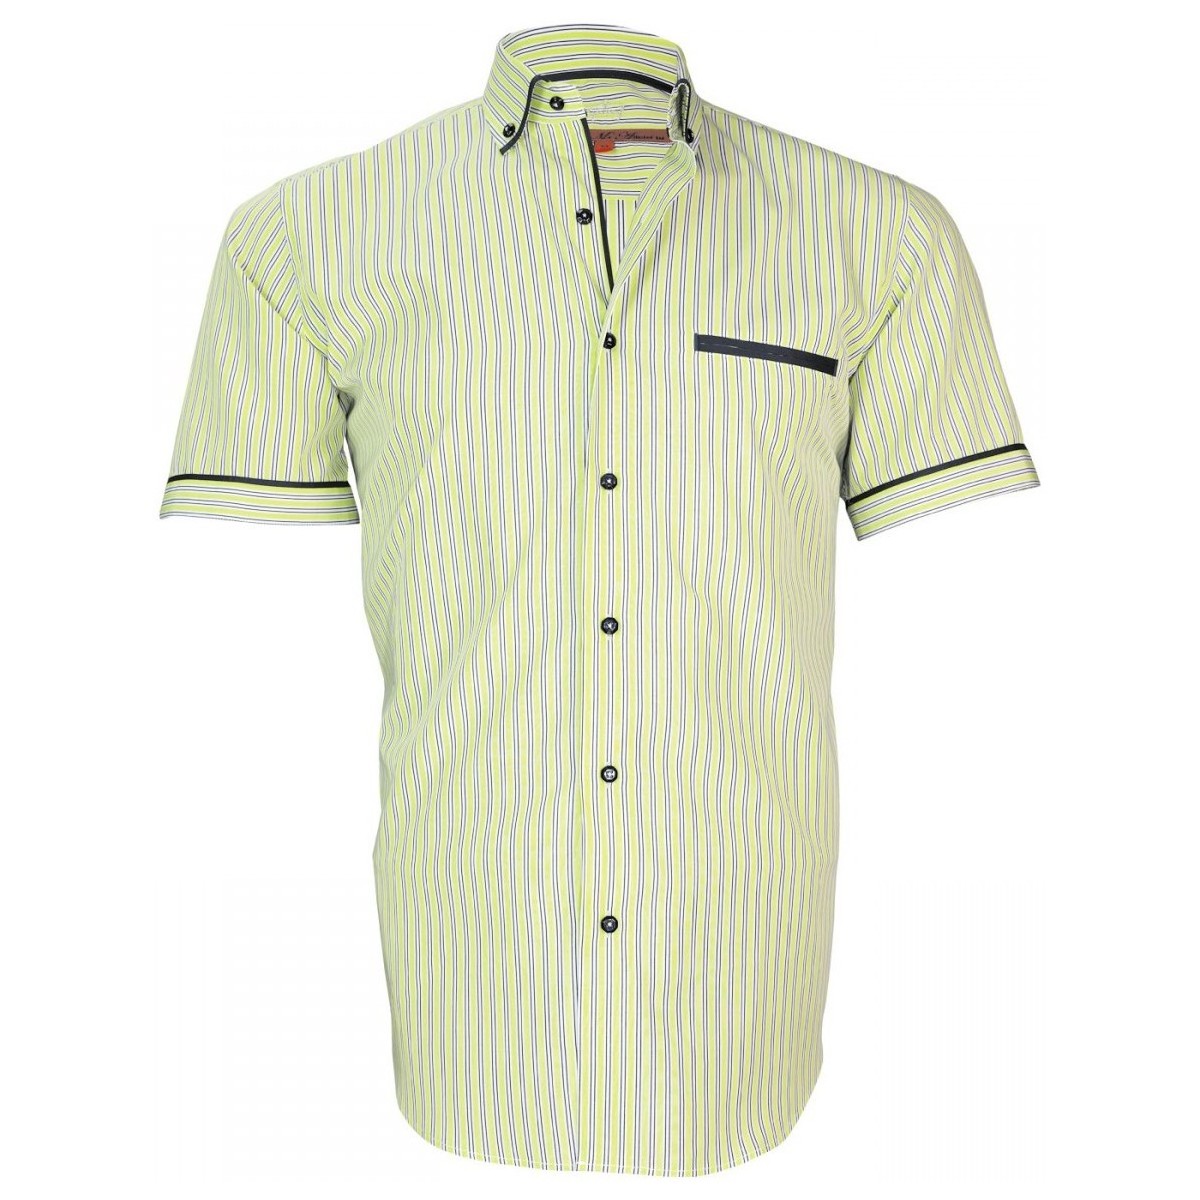 Vêtements Homme Chemises manches courtes Andrew Mc Allister chemisette sport dixon vert Vert